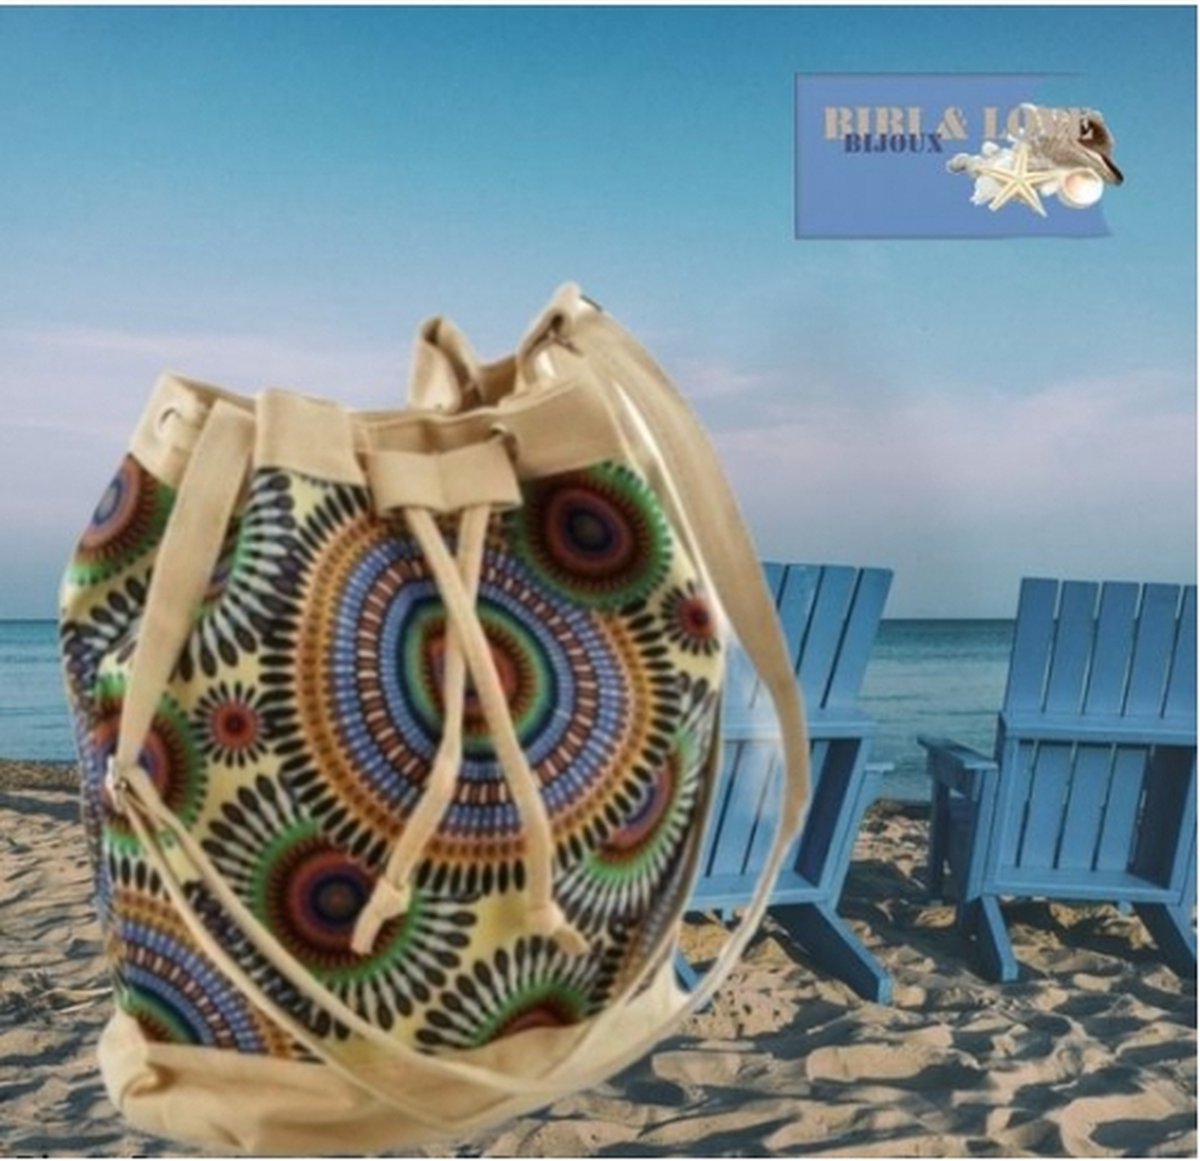 BB - BOHO style schoudertas / buidel tas - beige (zand) meerkleurig multicolour - vakantie holiday casual